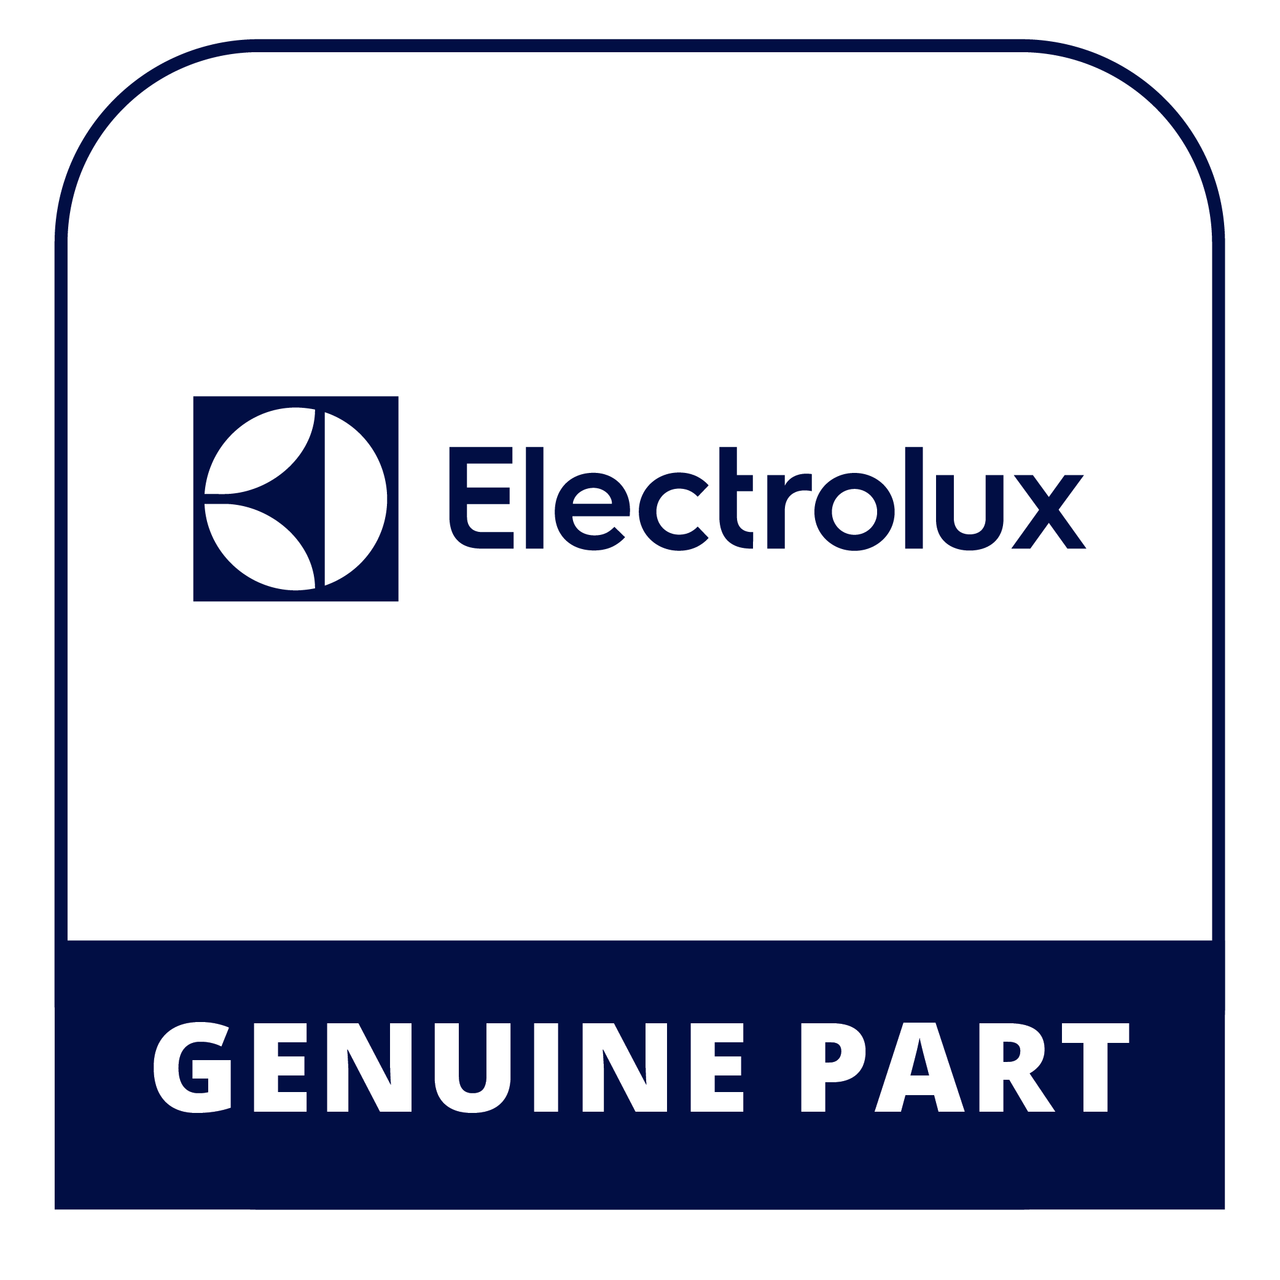 Frigidaire - Electrolux 316419835 Overlay - Genuine Electrolux Part